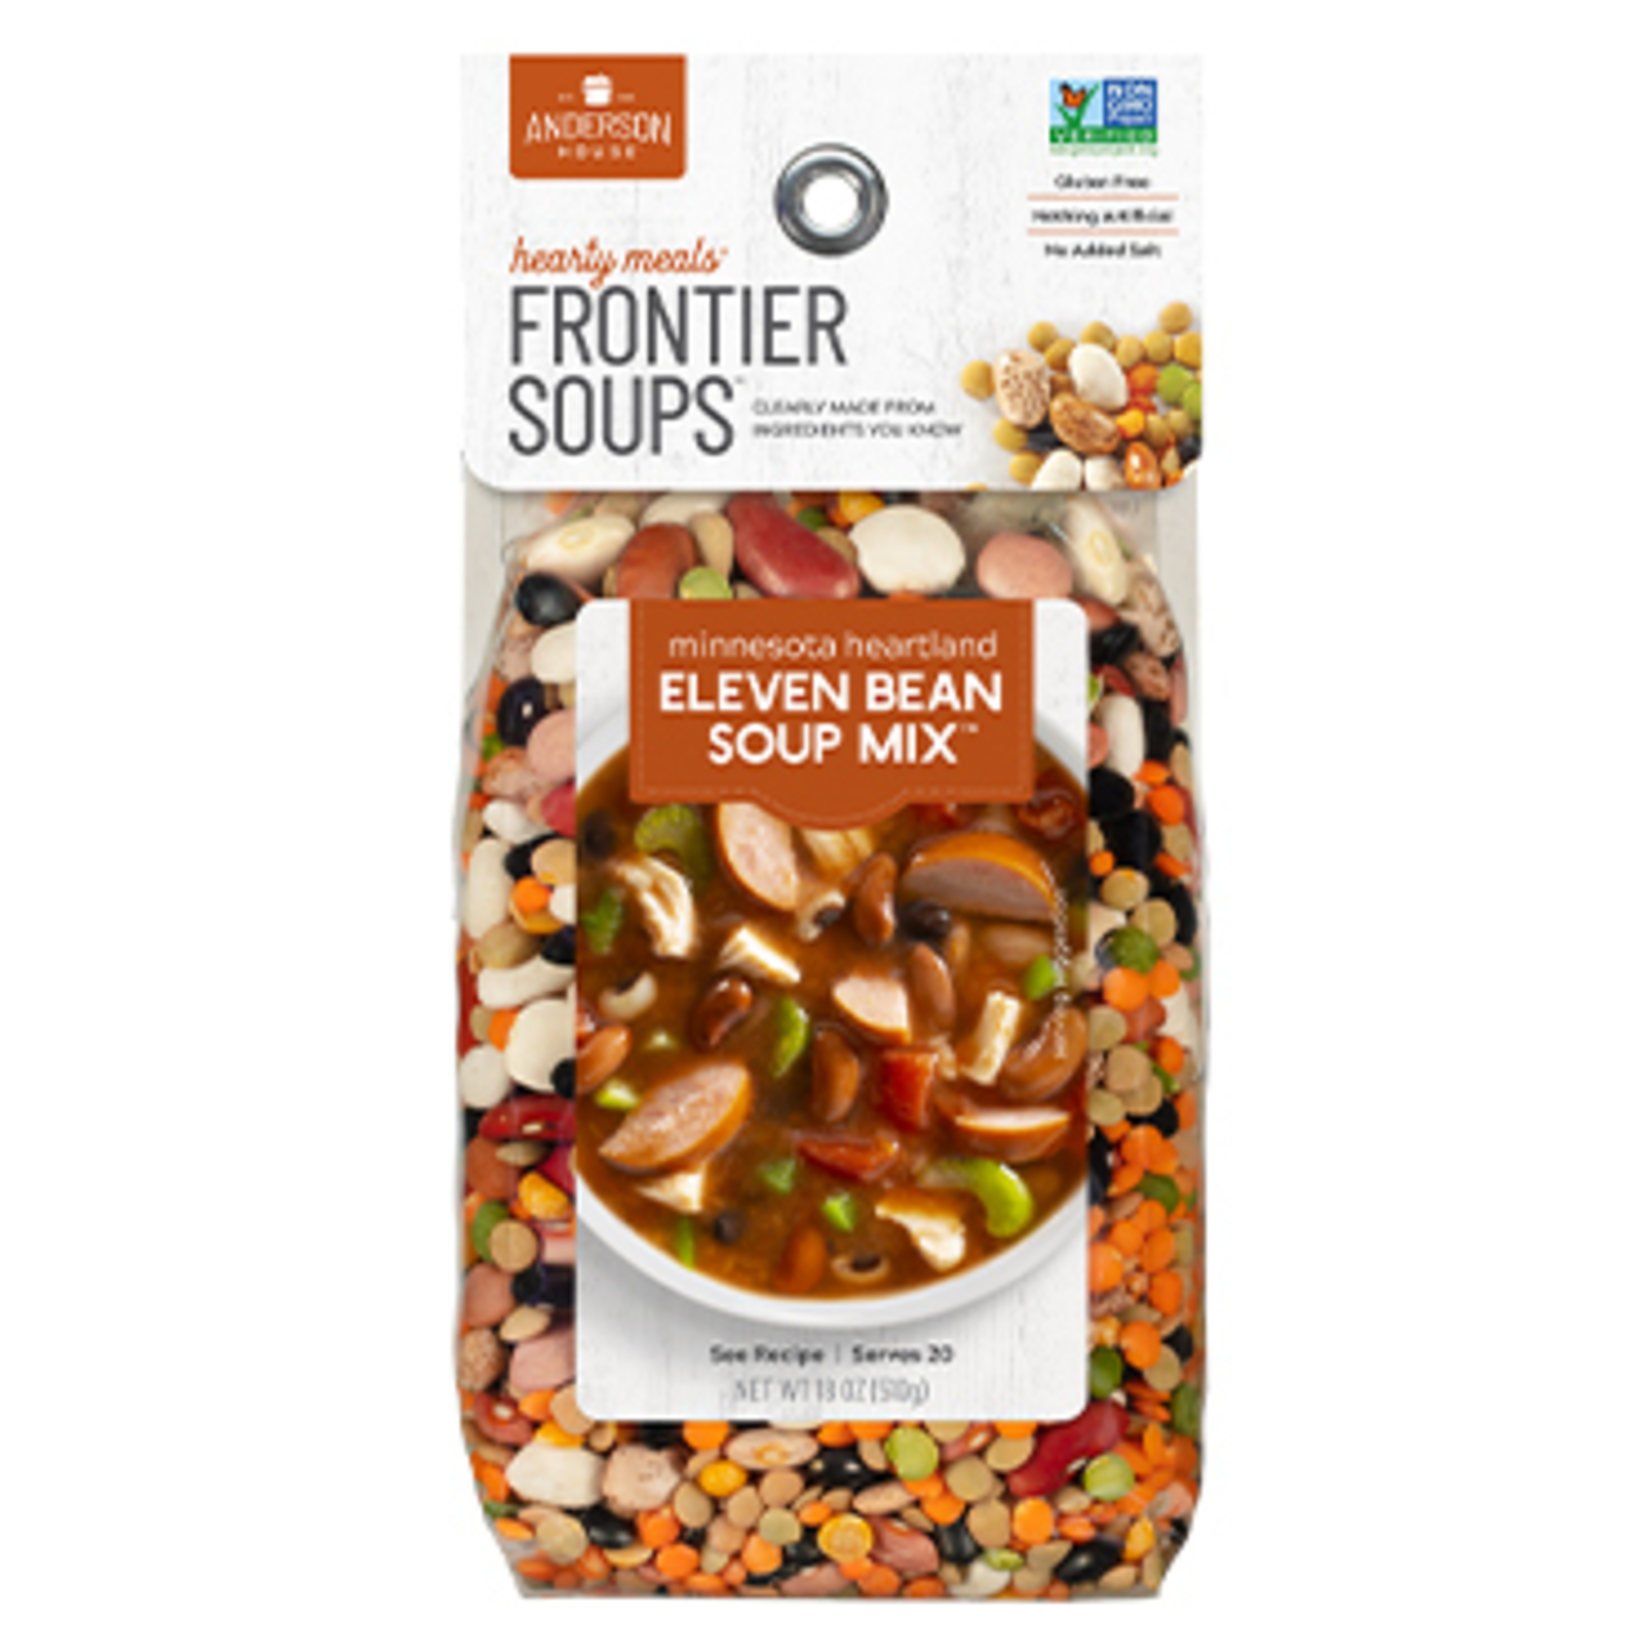 Frontier Soups Minnesota Heartland Eleven Bean Soup Mix